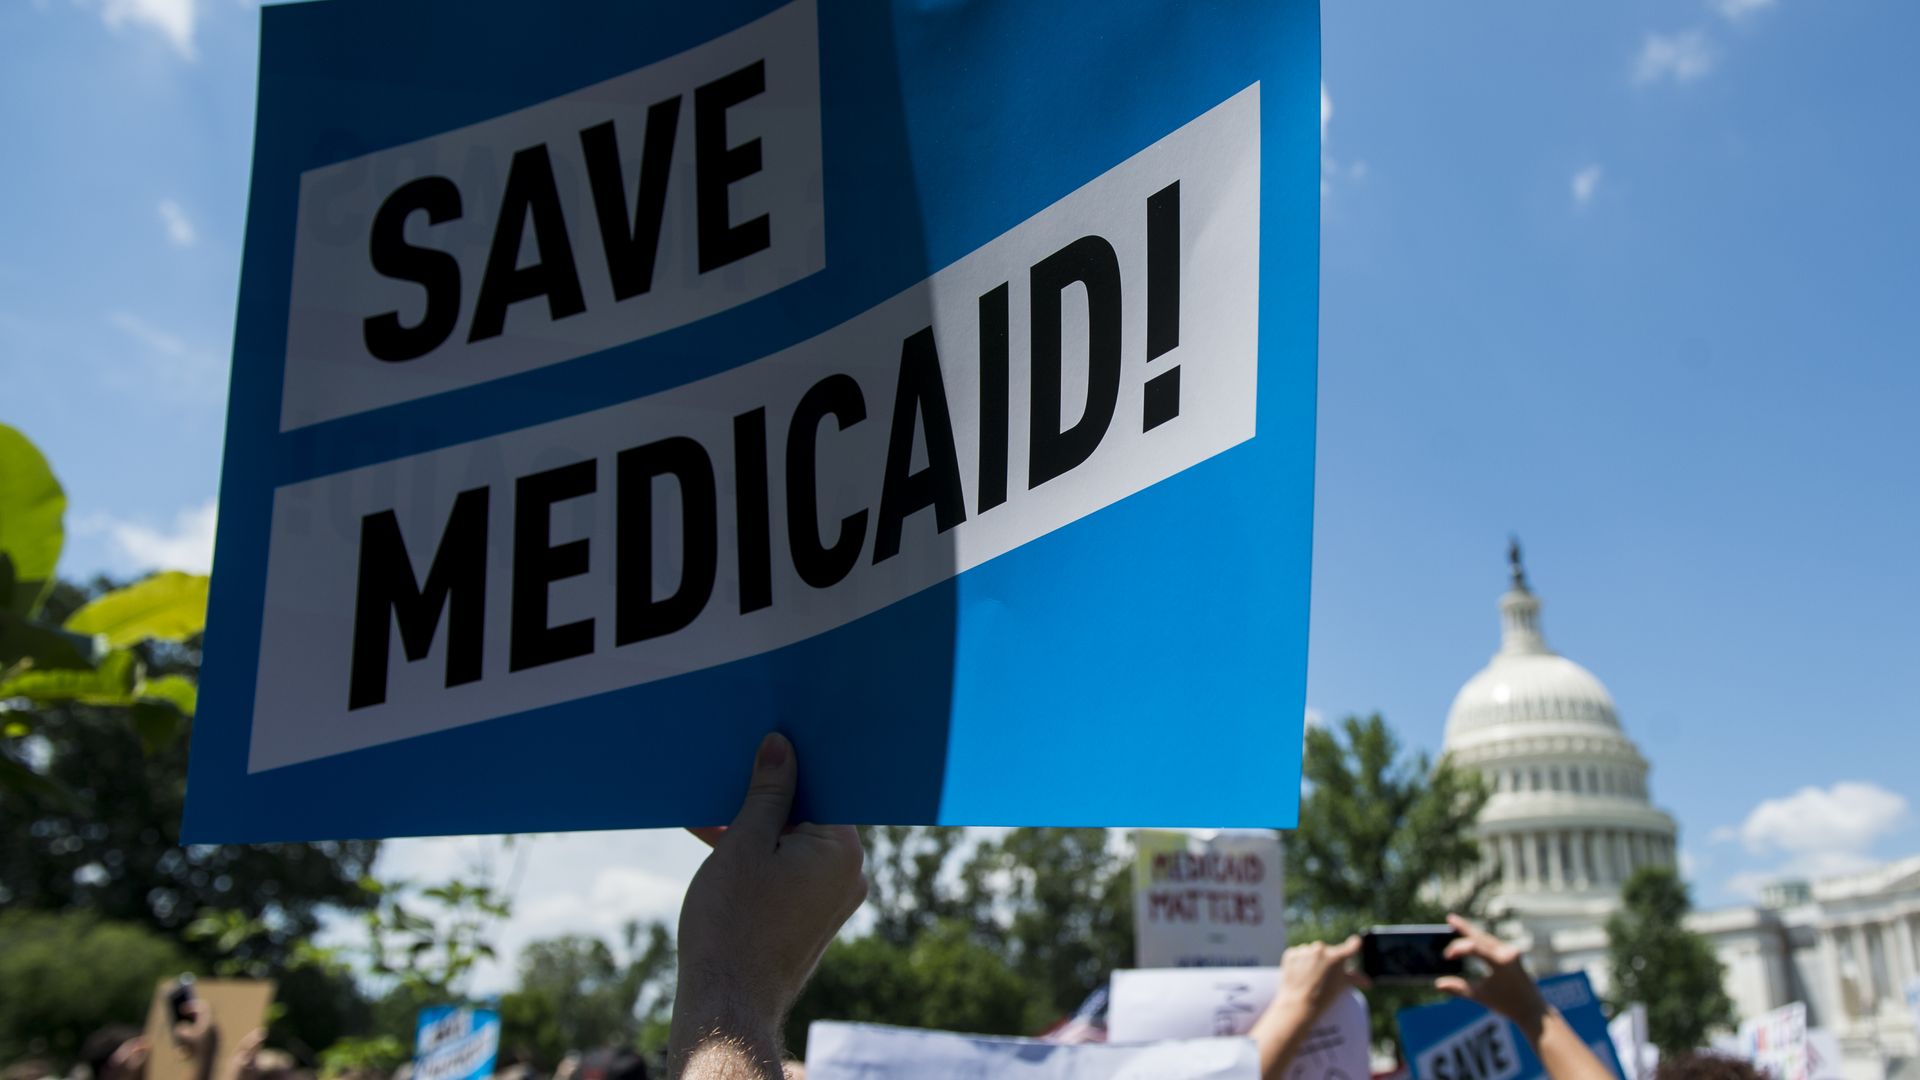 A sign saying "Save Medicaid!"